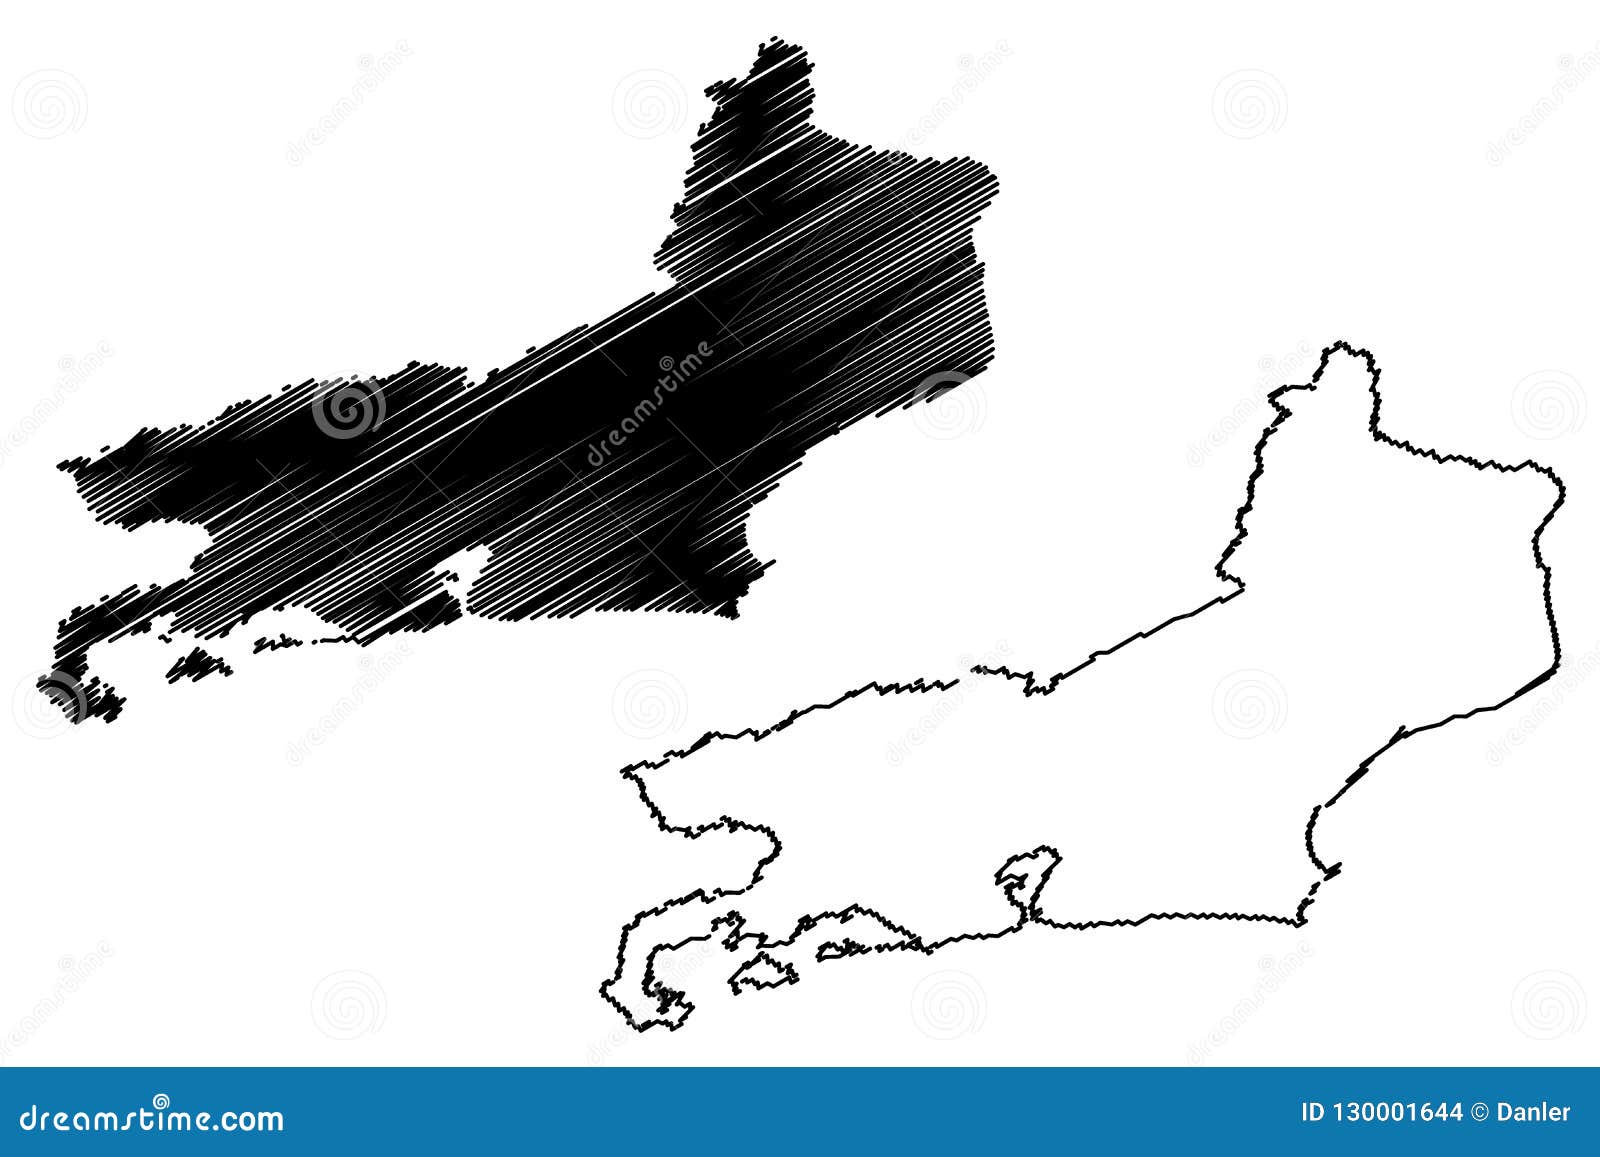 Rio De Janeiro State Map Vector Stock Vector Illustration Of Insignia Oblast